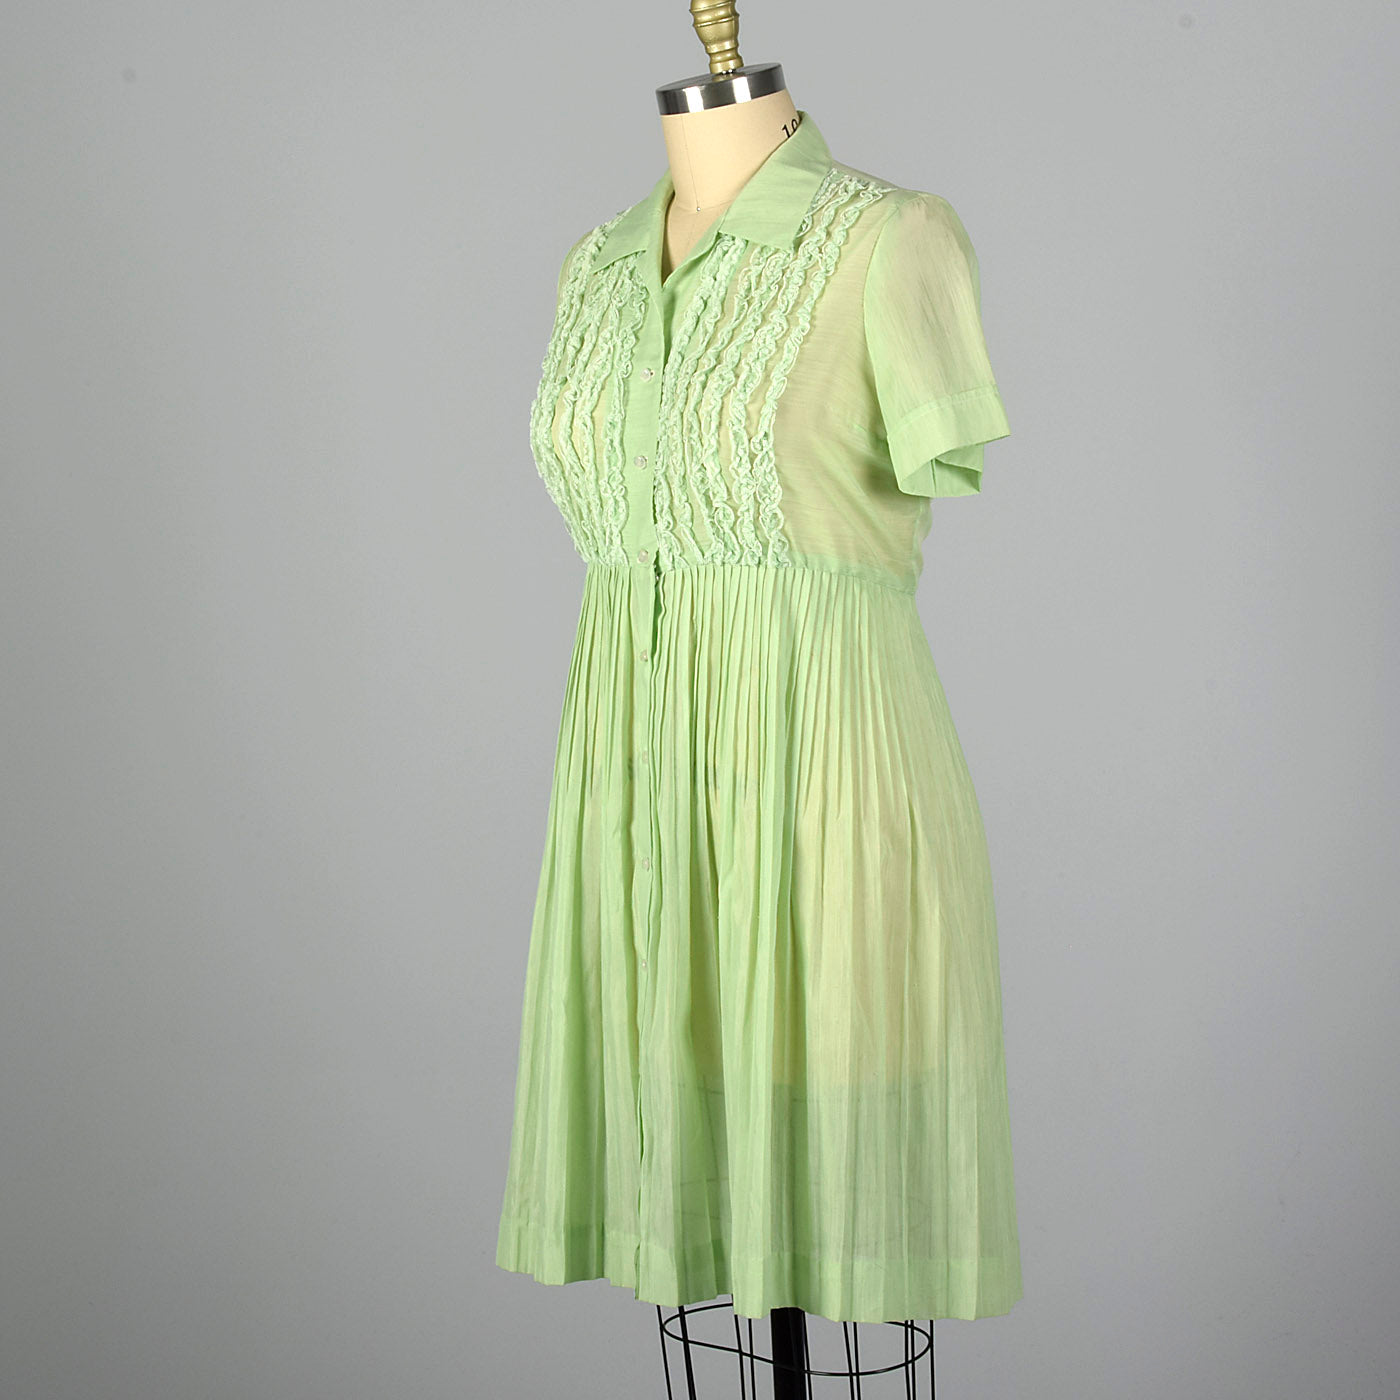 1950s Sheer Green Dress with Ruffle Bodice